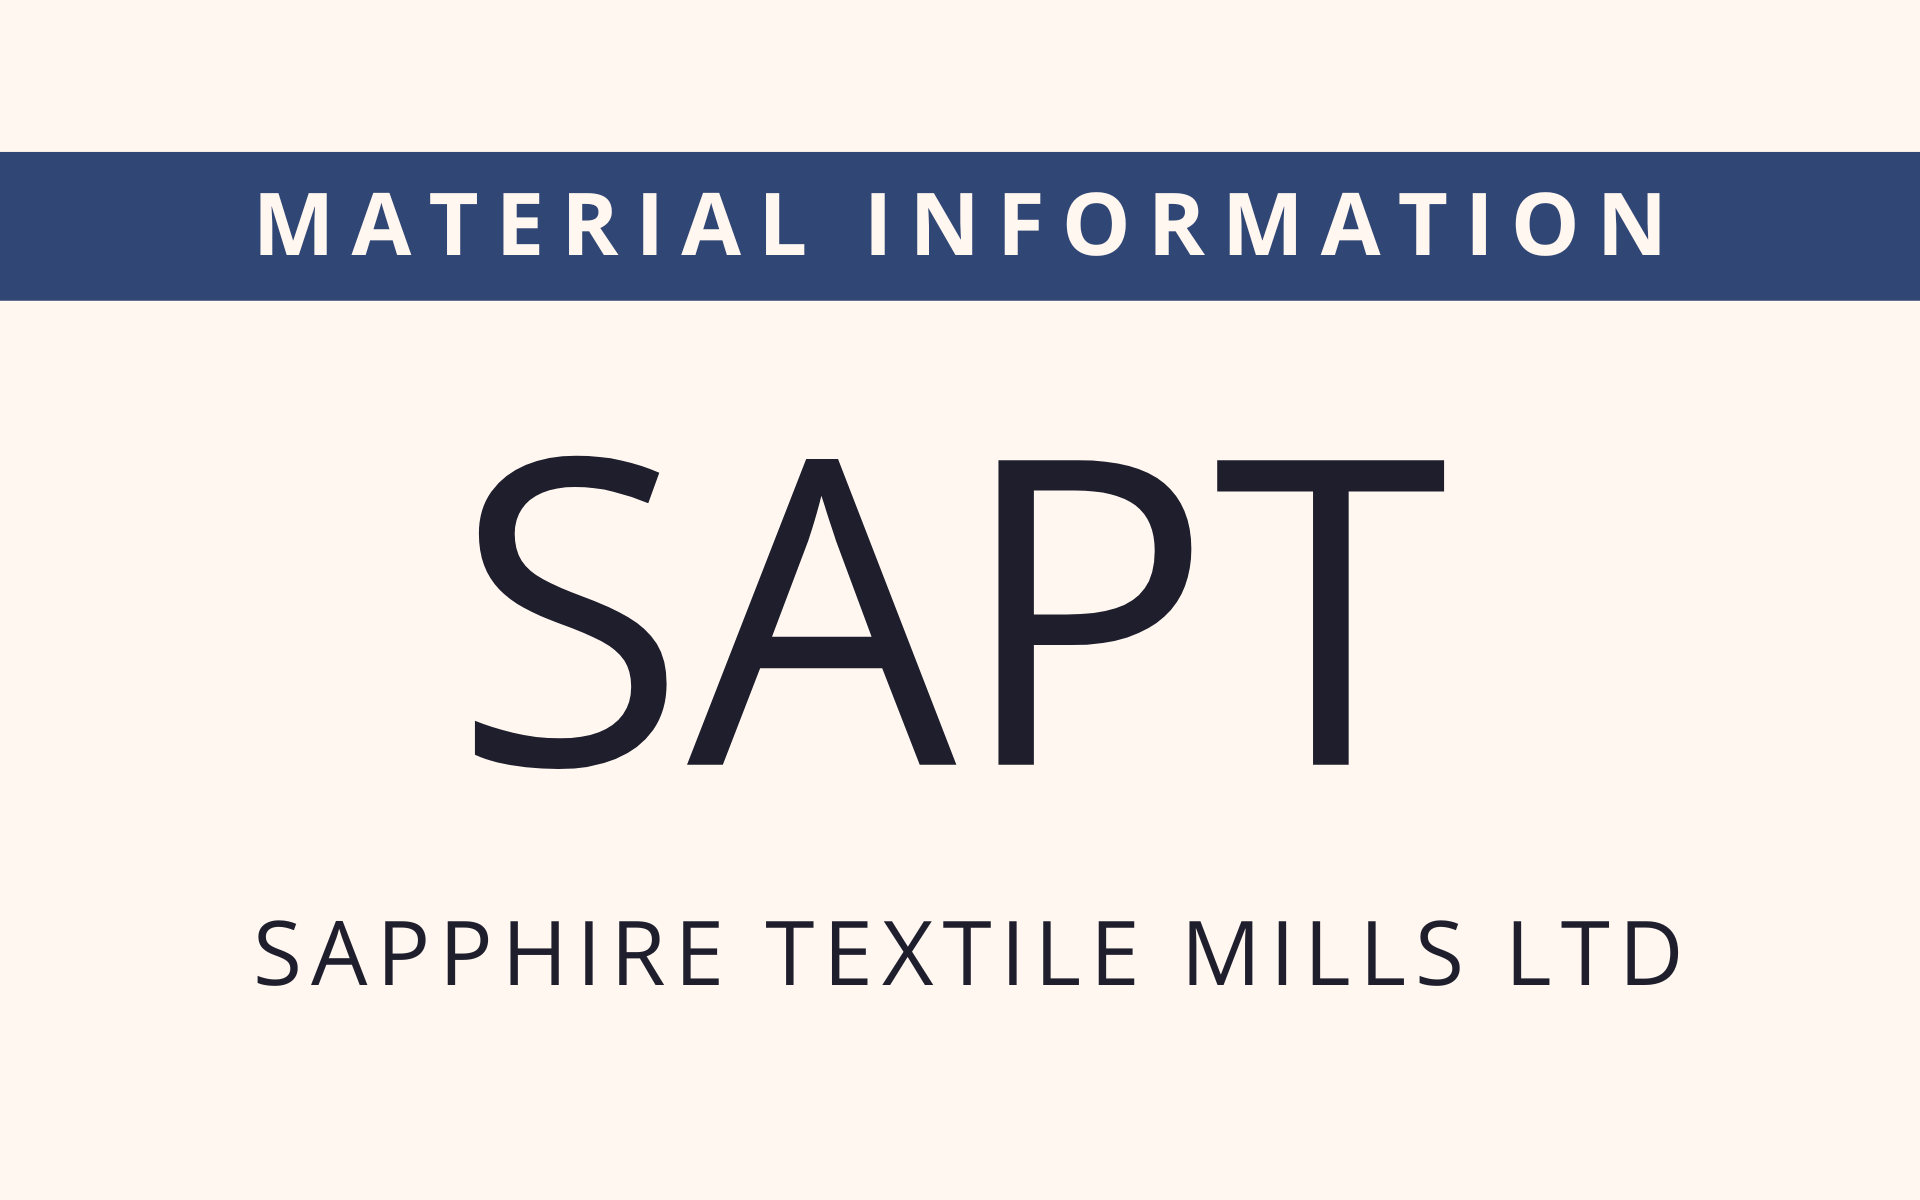 SAPT - Material Information